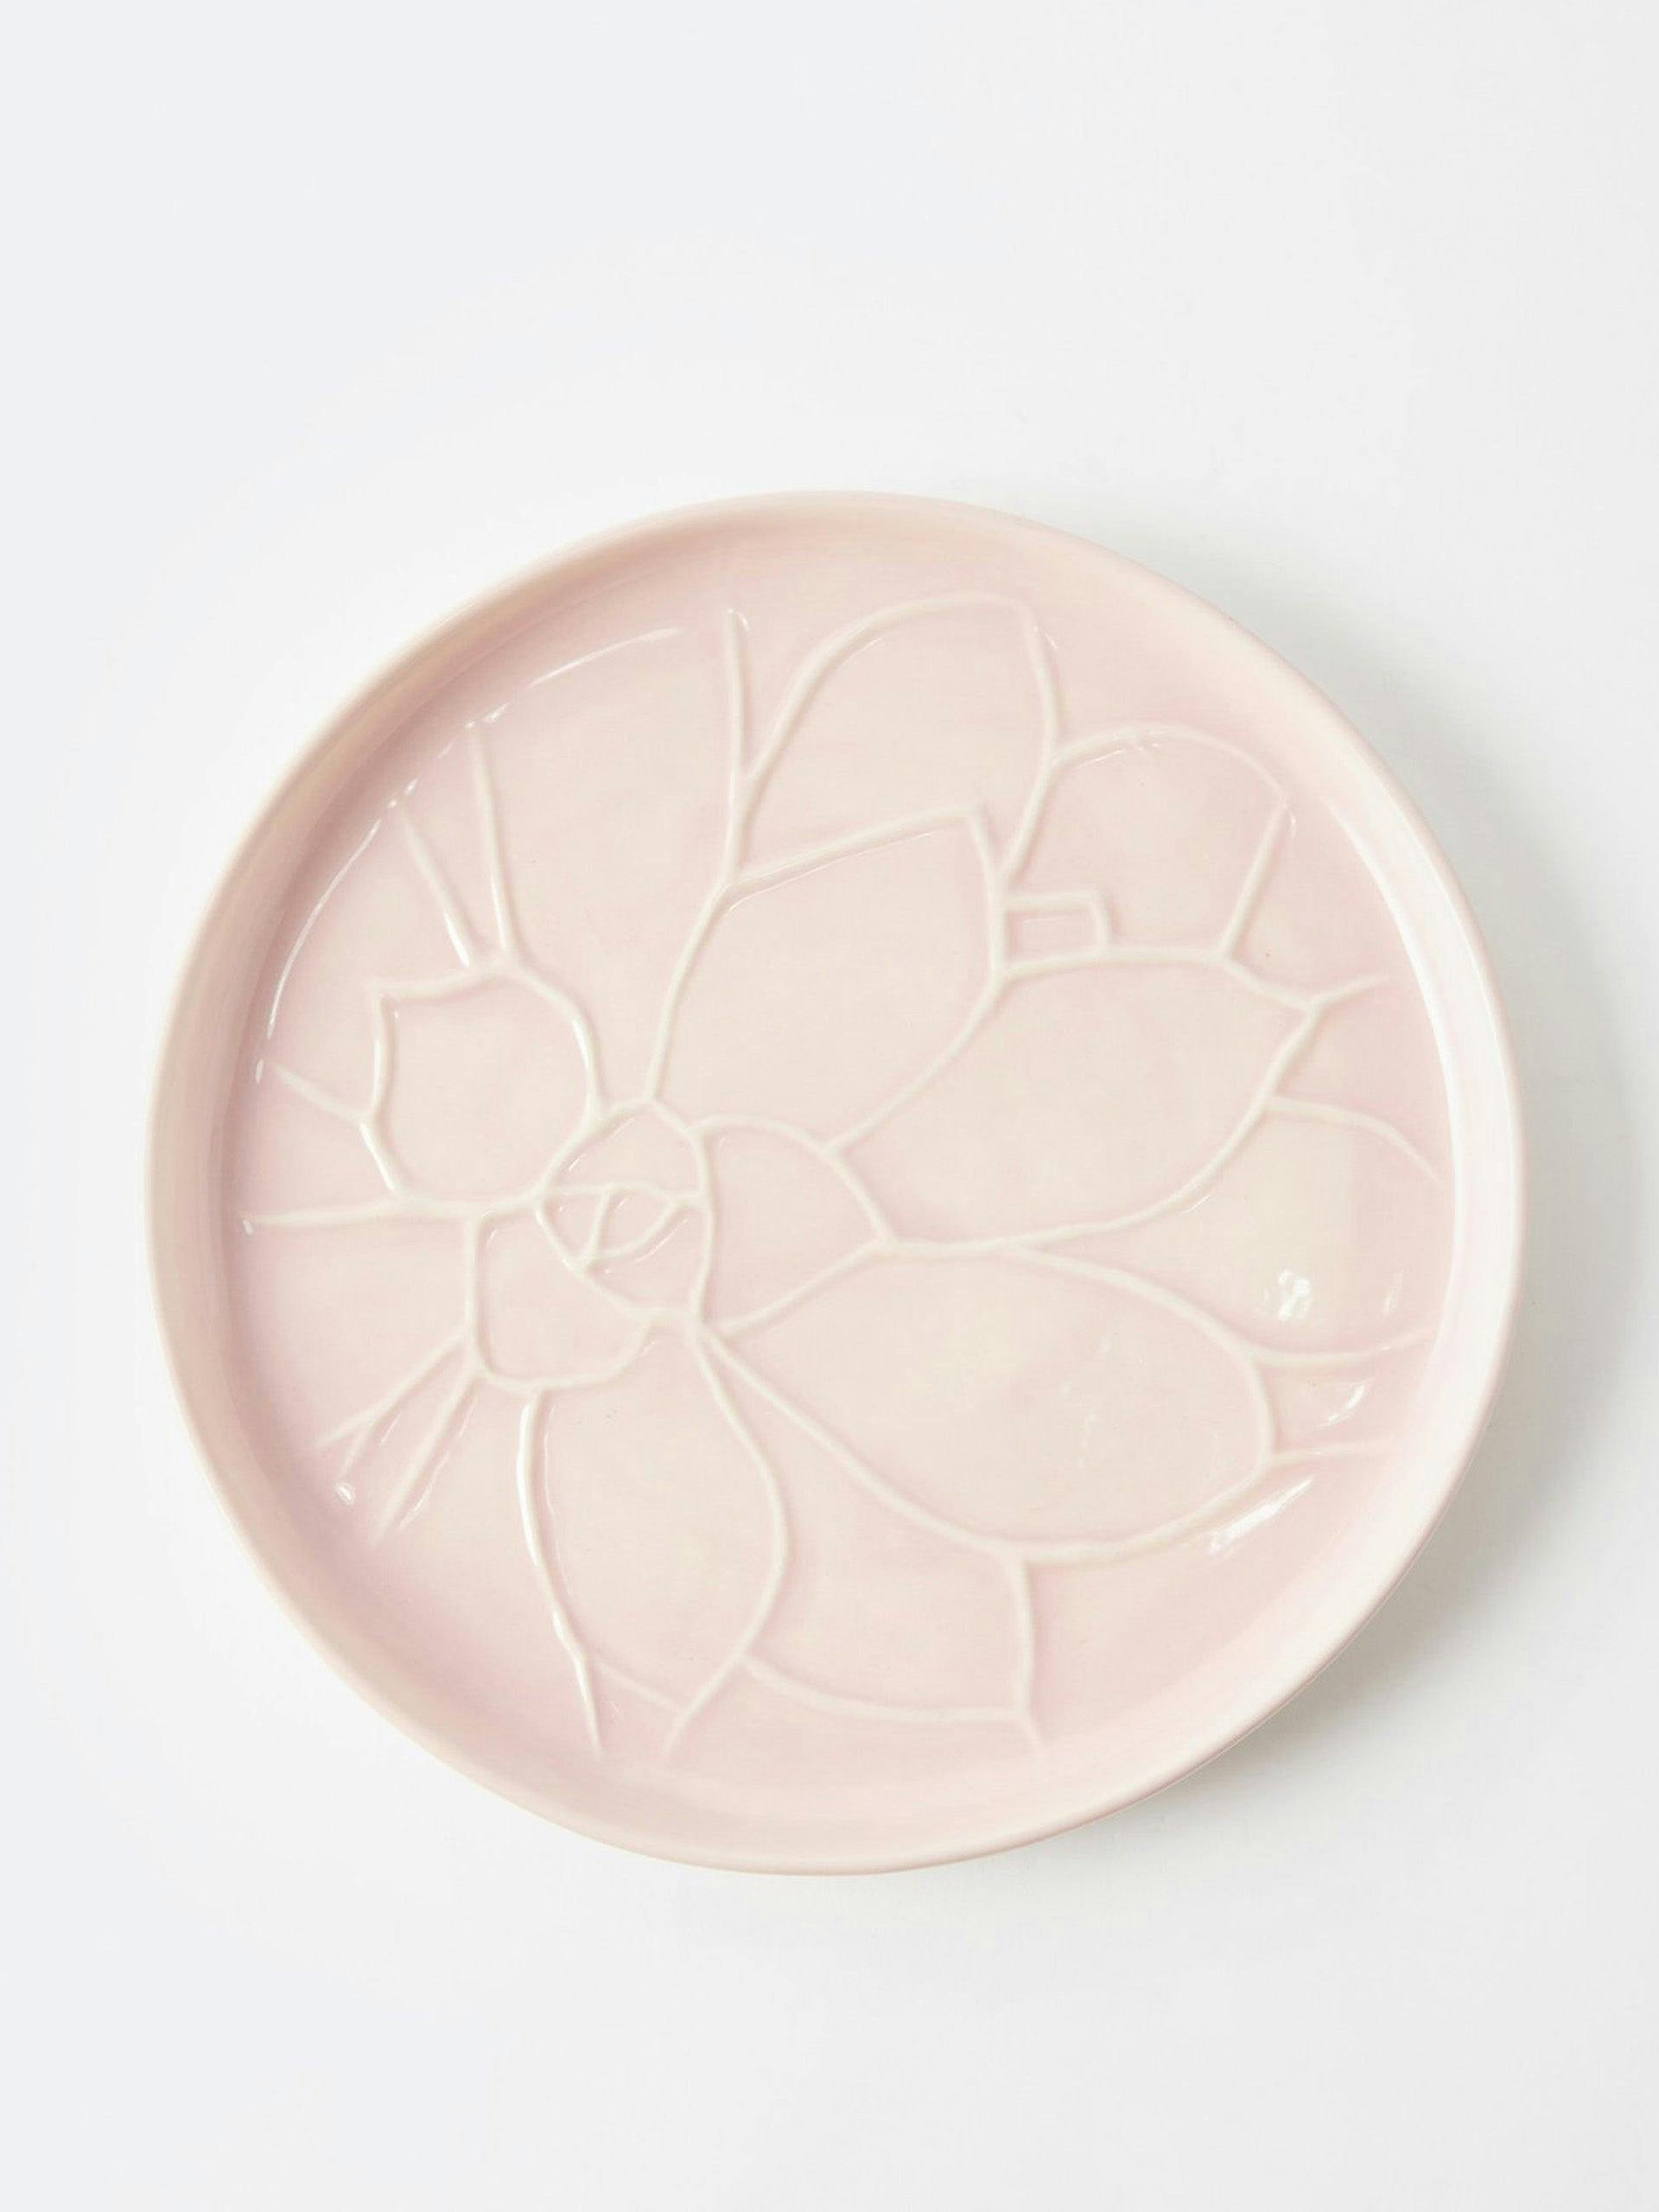 Lotus ceramic serving plate